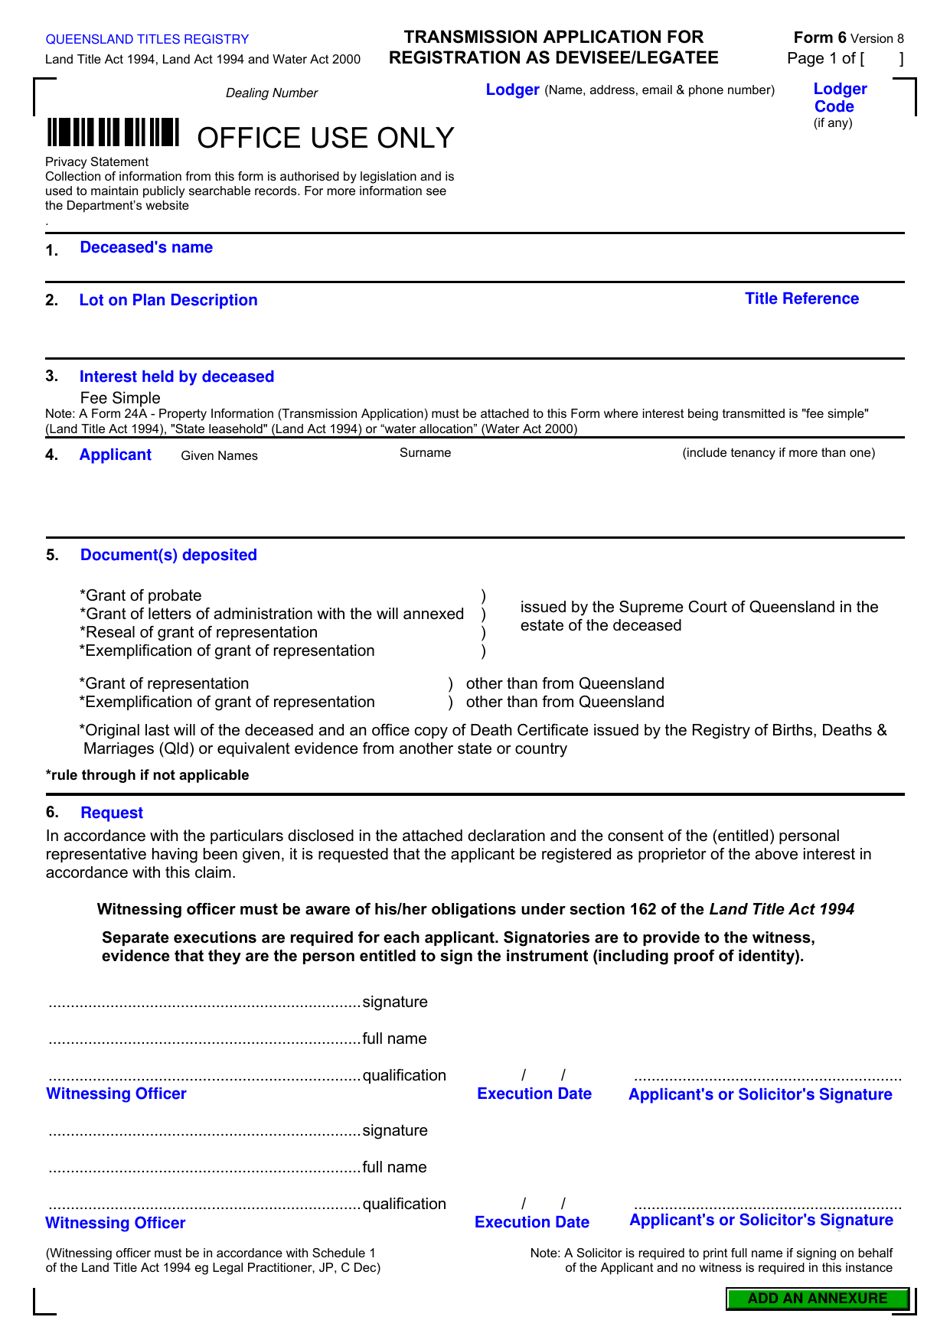 Form 6 Transmission Application for Registration as Devisee / Legatee - Queensland, Australia, Page 1